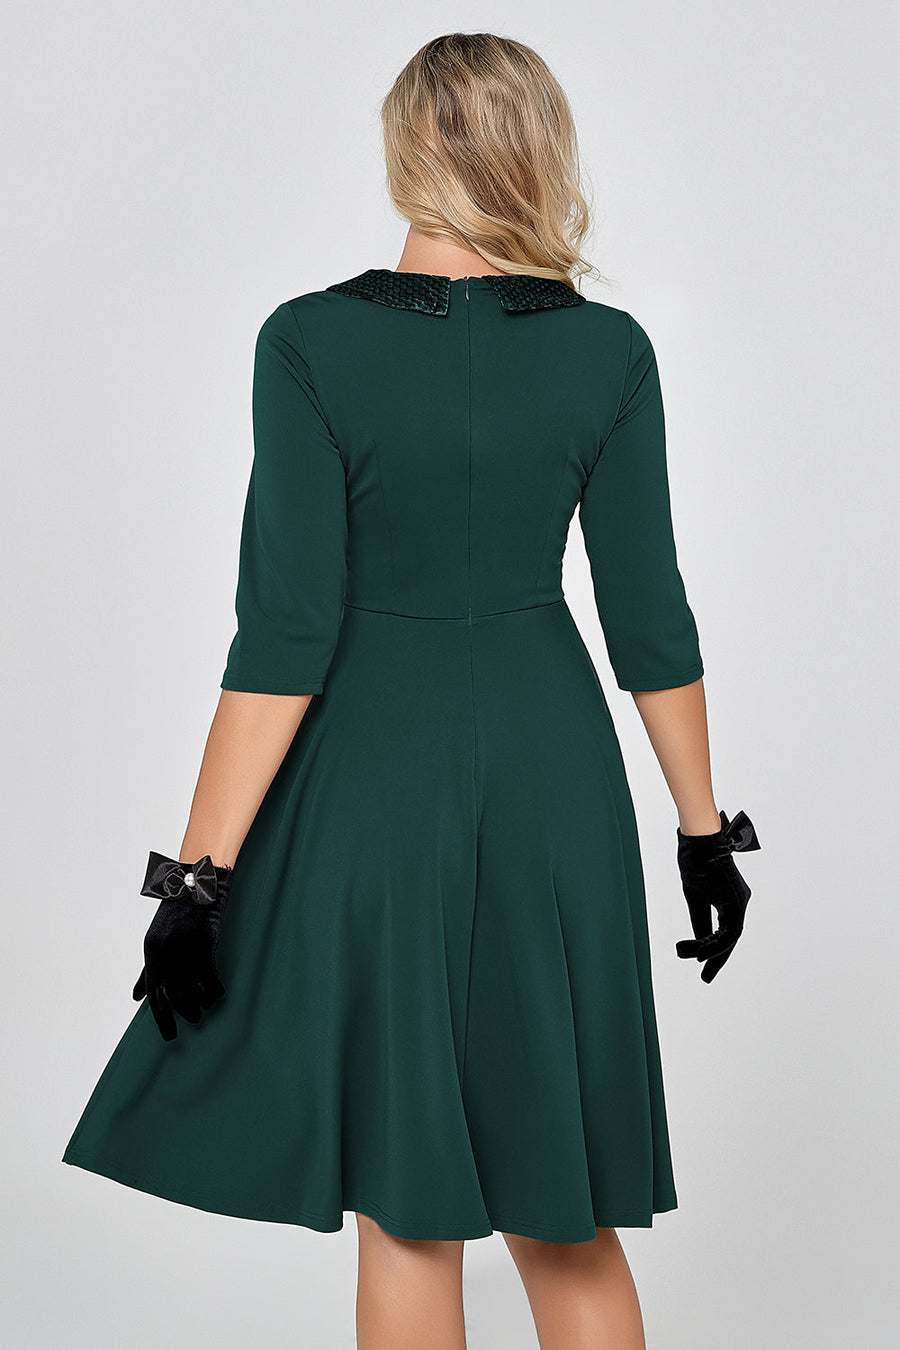 1950s Dresses | Shop Vintage & Retro Women's Clothing Online NZ – ZAPAKA NZ